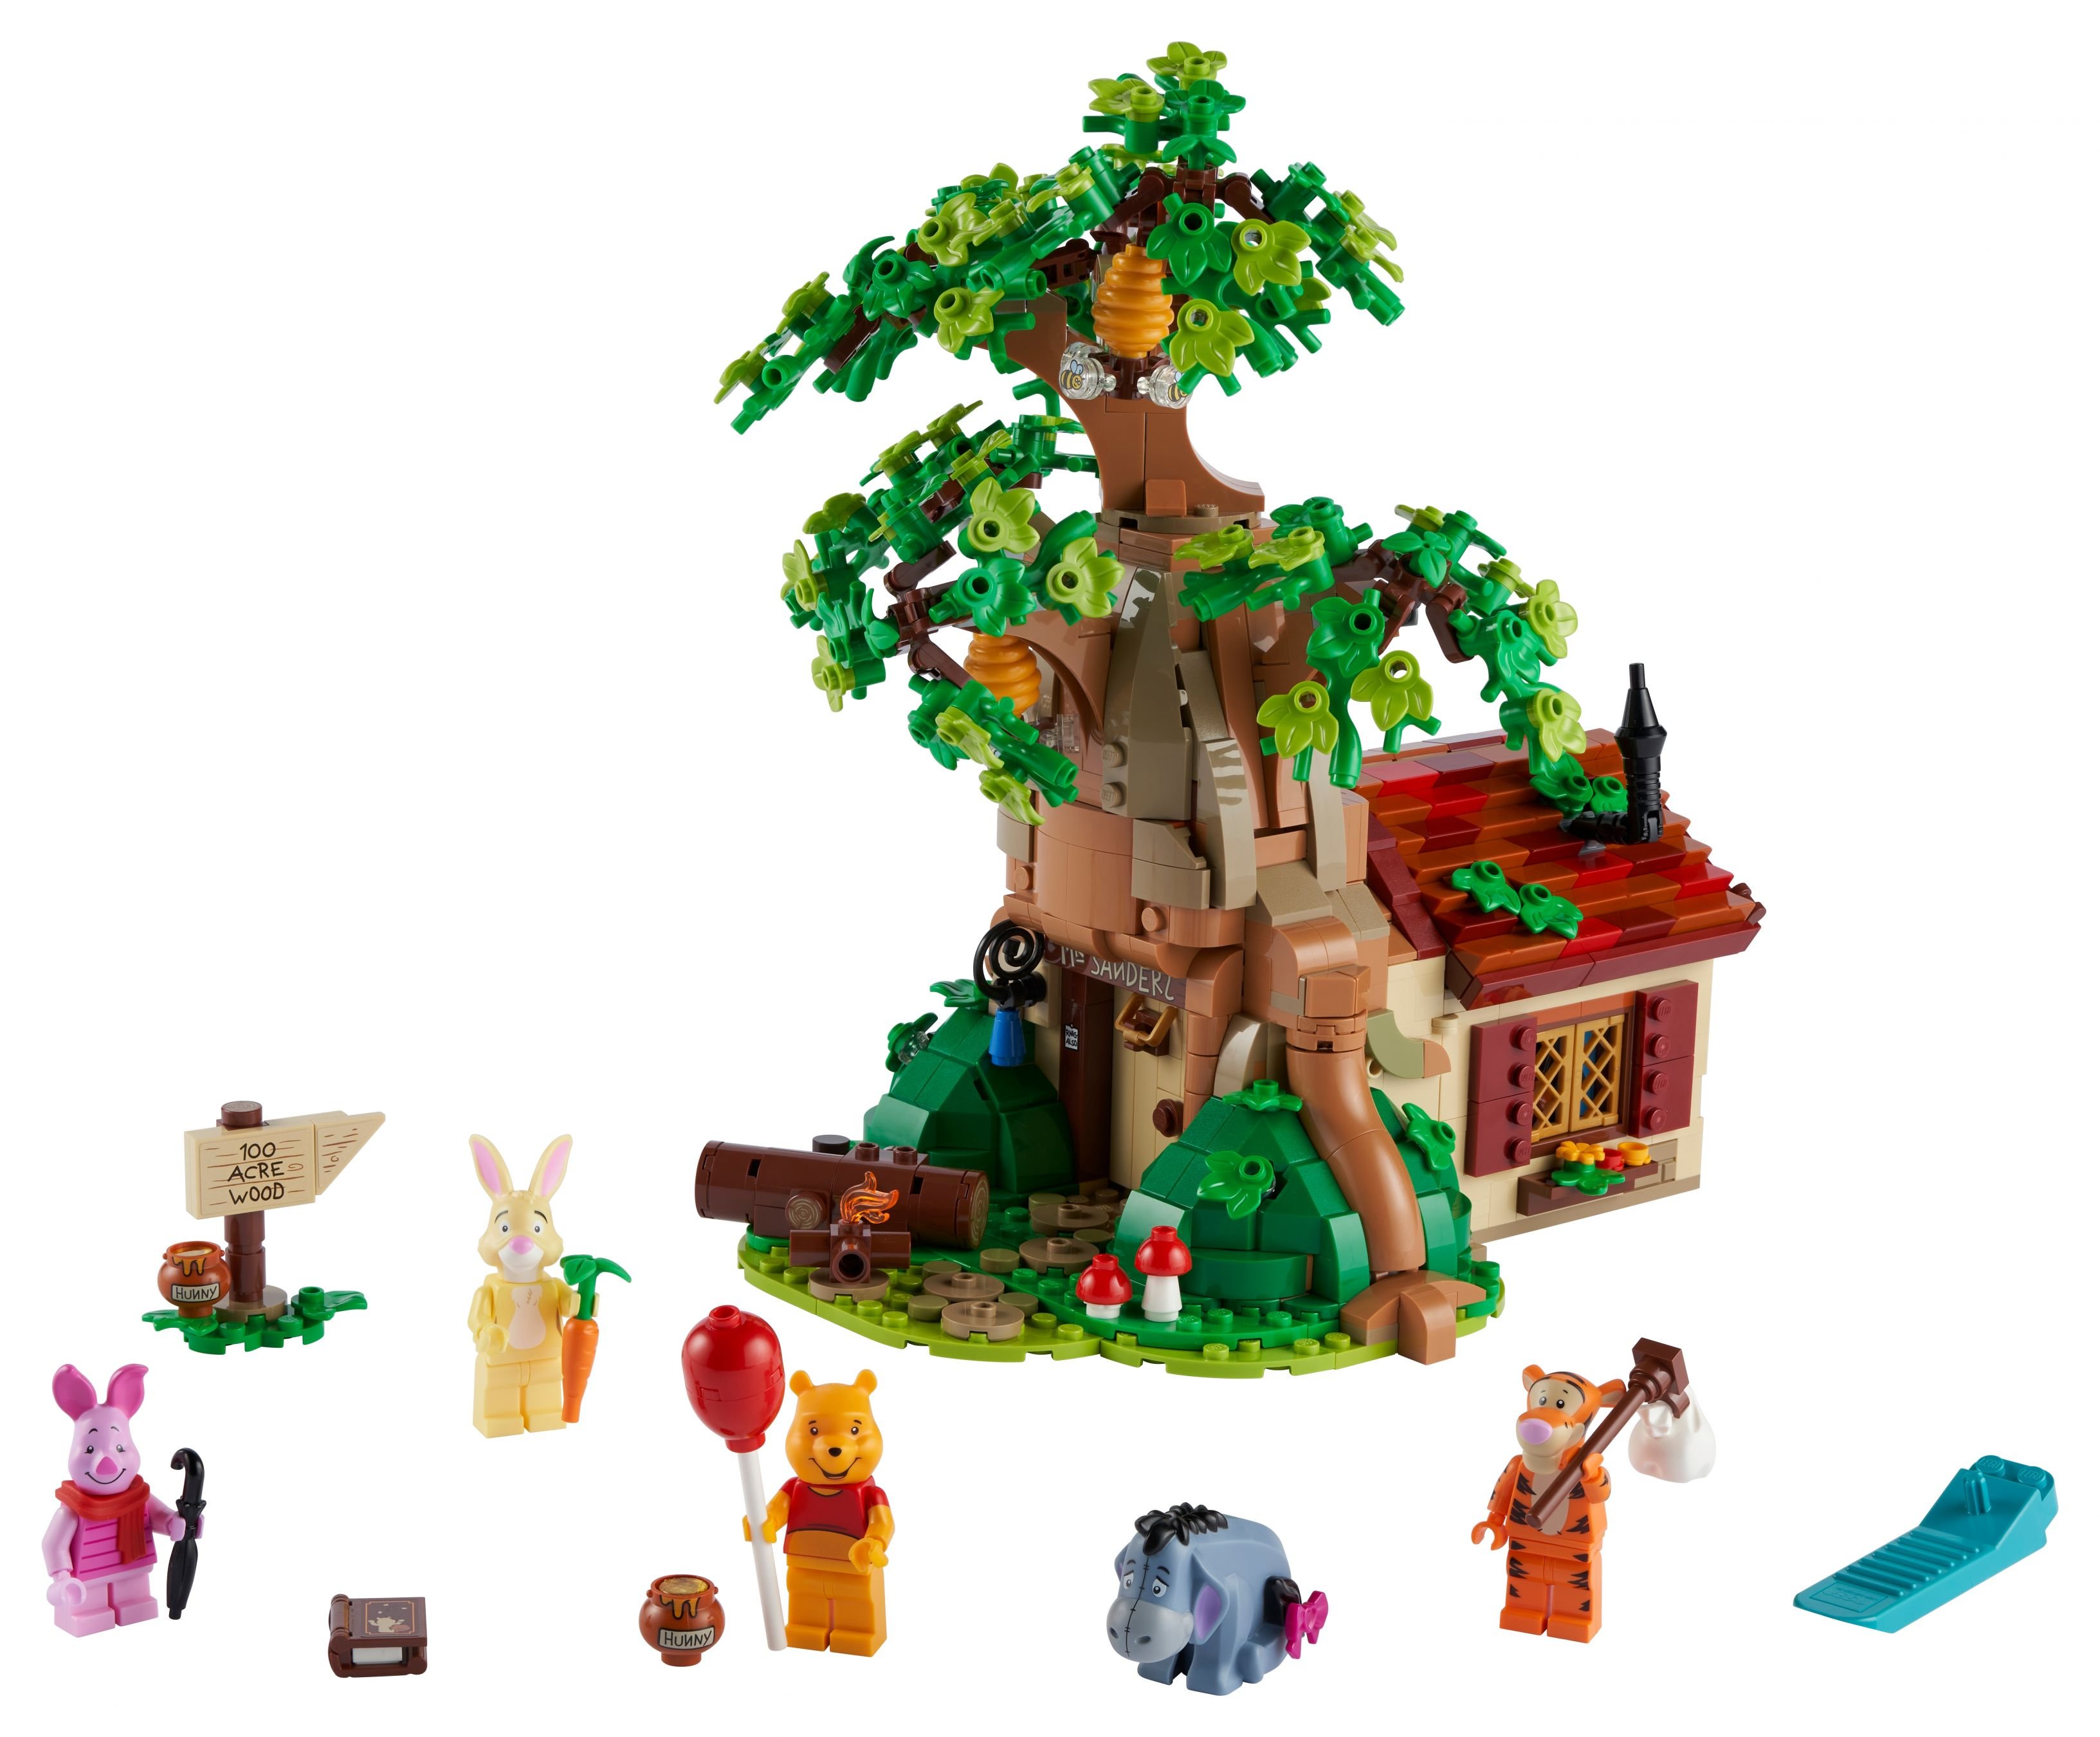 Lego Ideas Winnie the Pooh Minifigure idea086 Brand New From Set 21326 